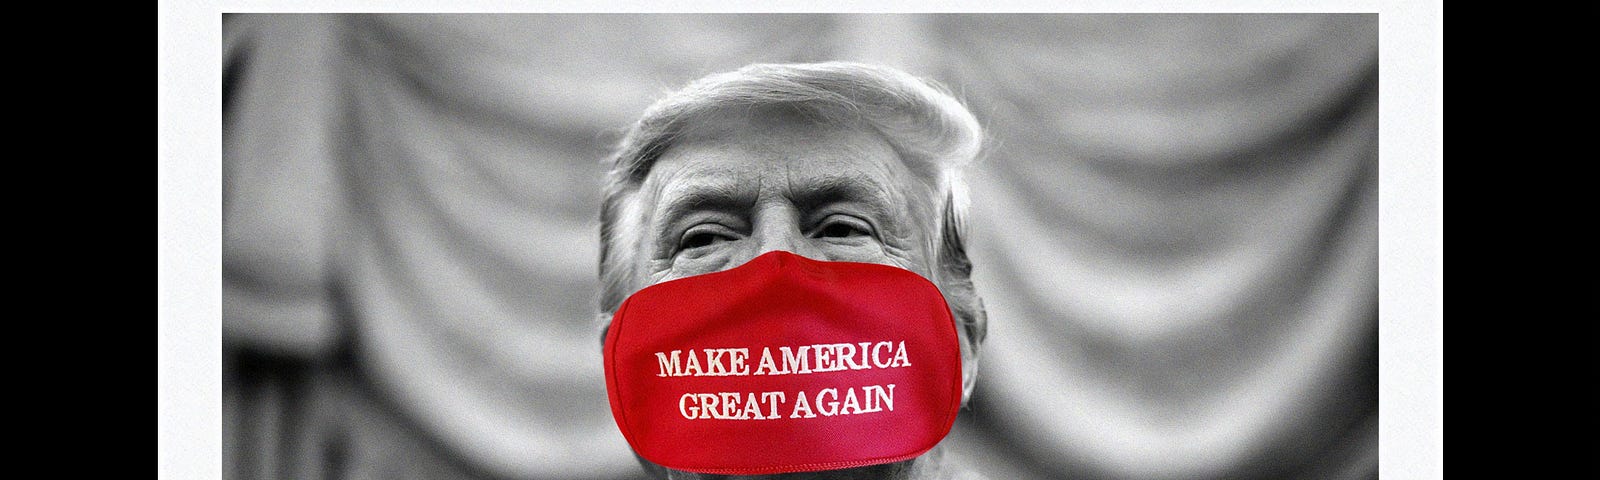 MAGA mask over Trump